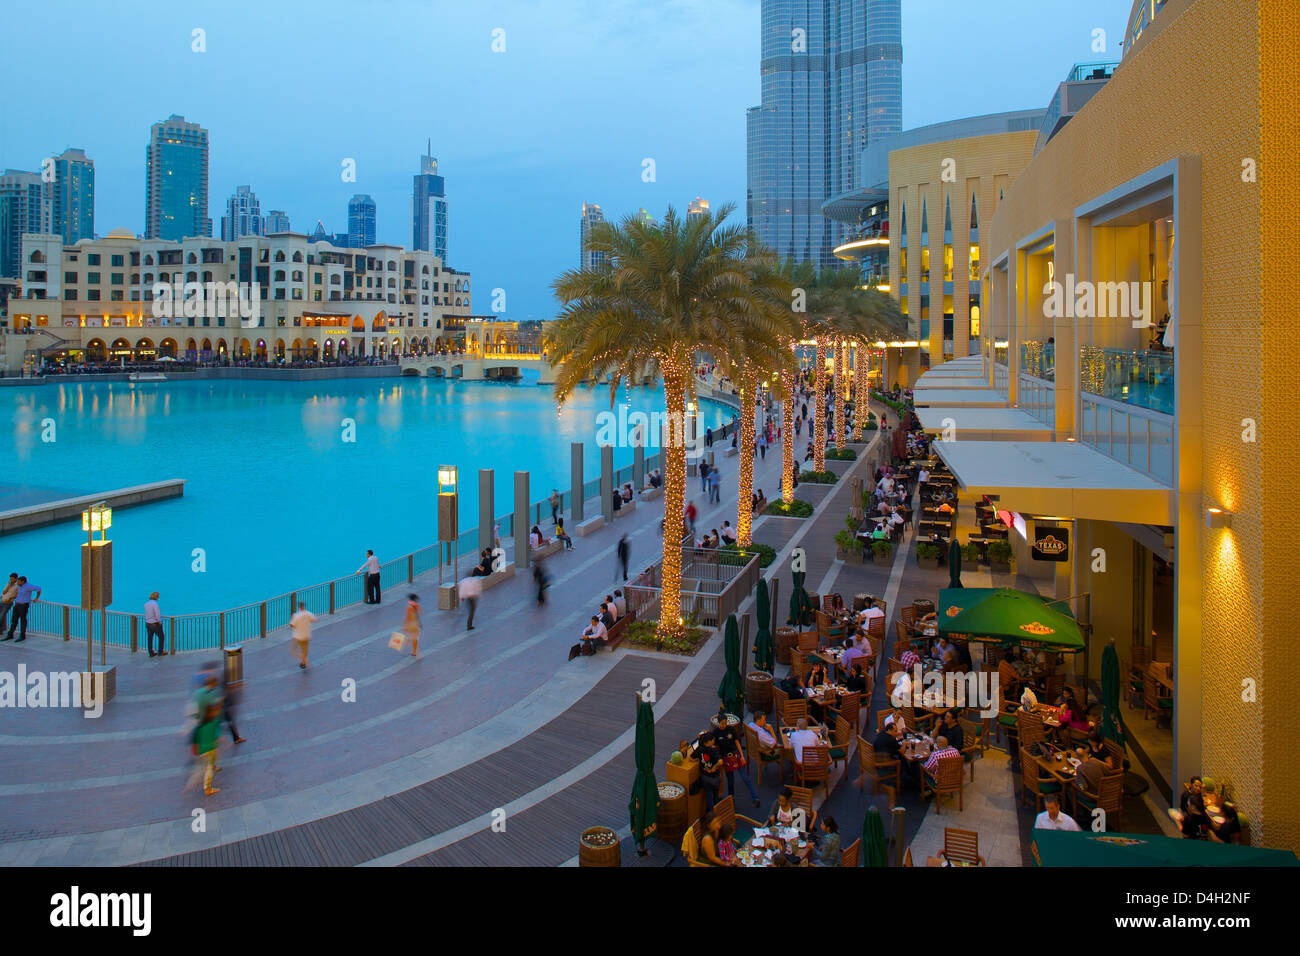 Restaurants near the Fountain, The Dubai Mall, Dubai, United Arab Emirates, Middle East Stock Photo